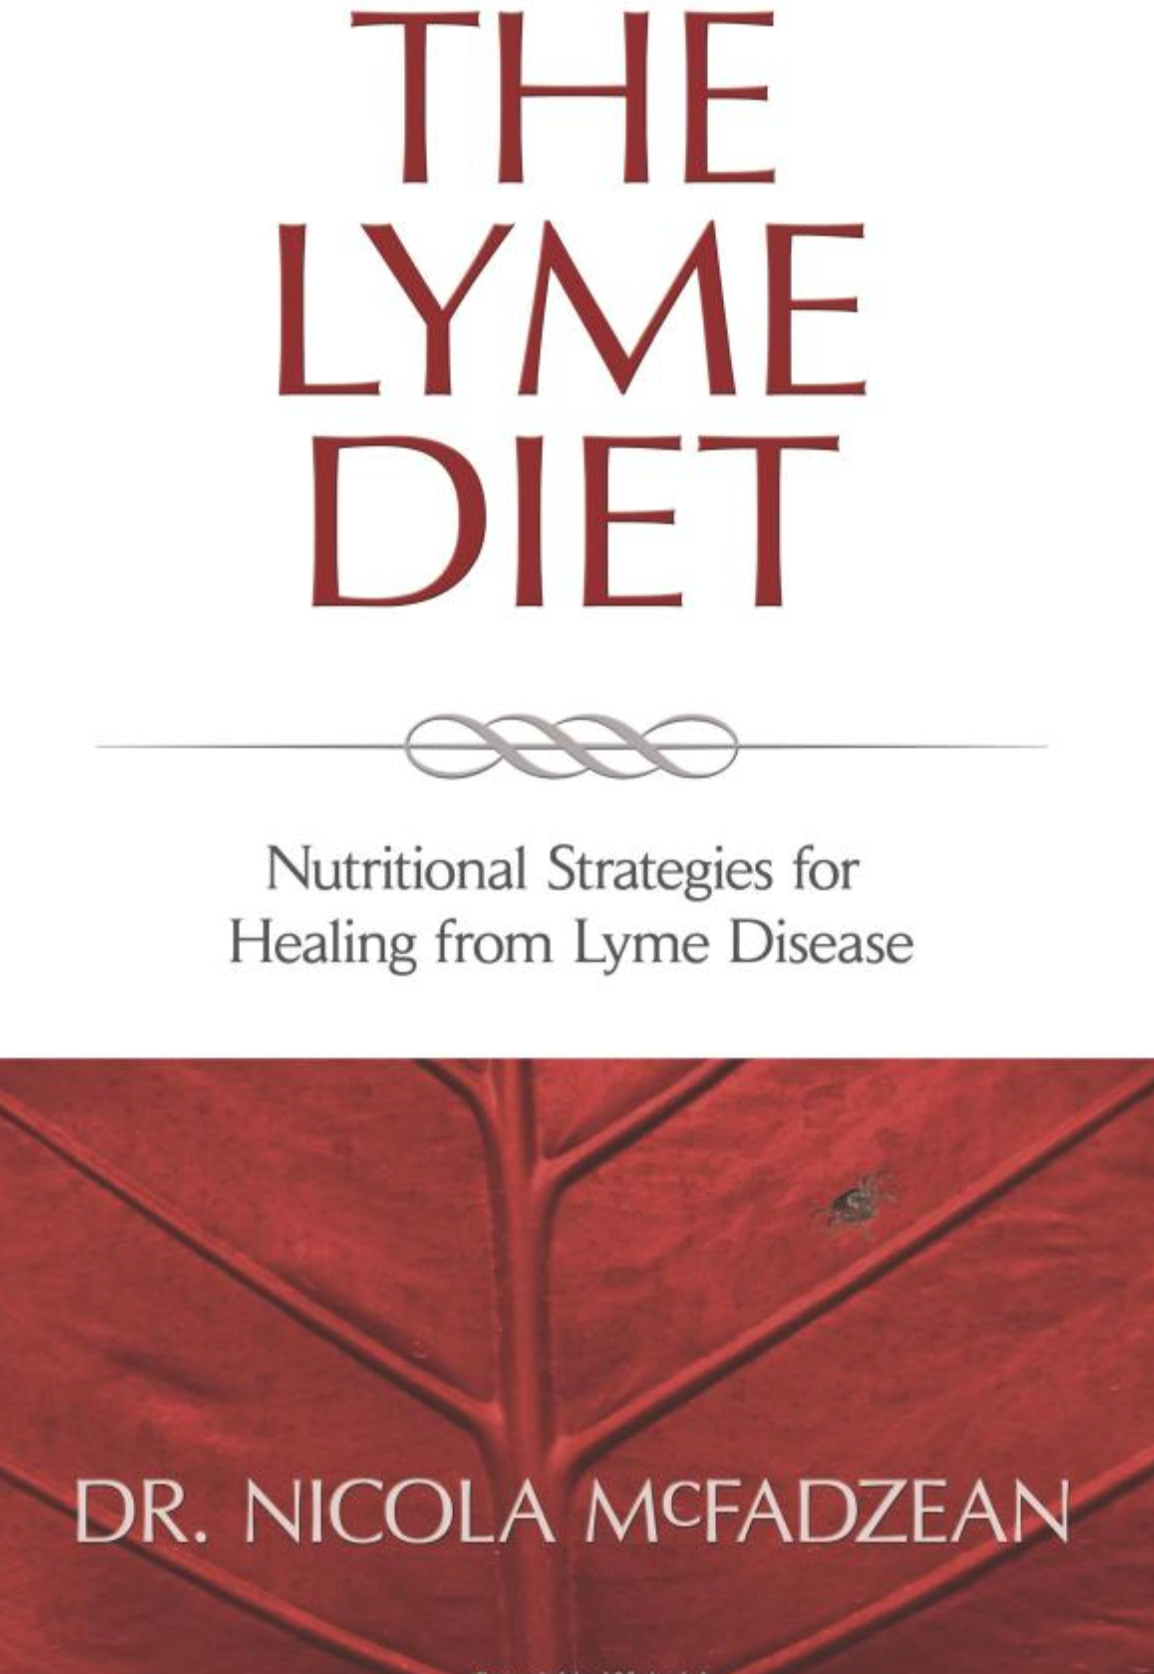 The Lyme Diet: Nutritional Strategies for Healing from Lyme Disease, By Nicola McFadzean ND